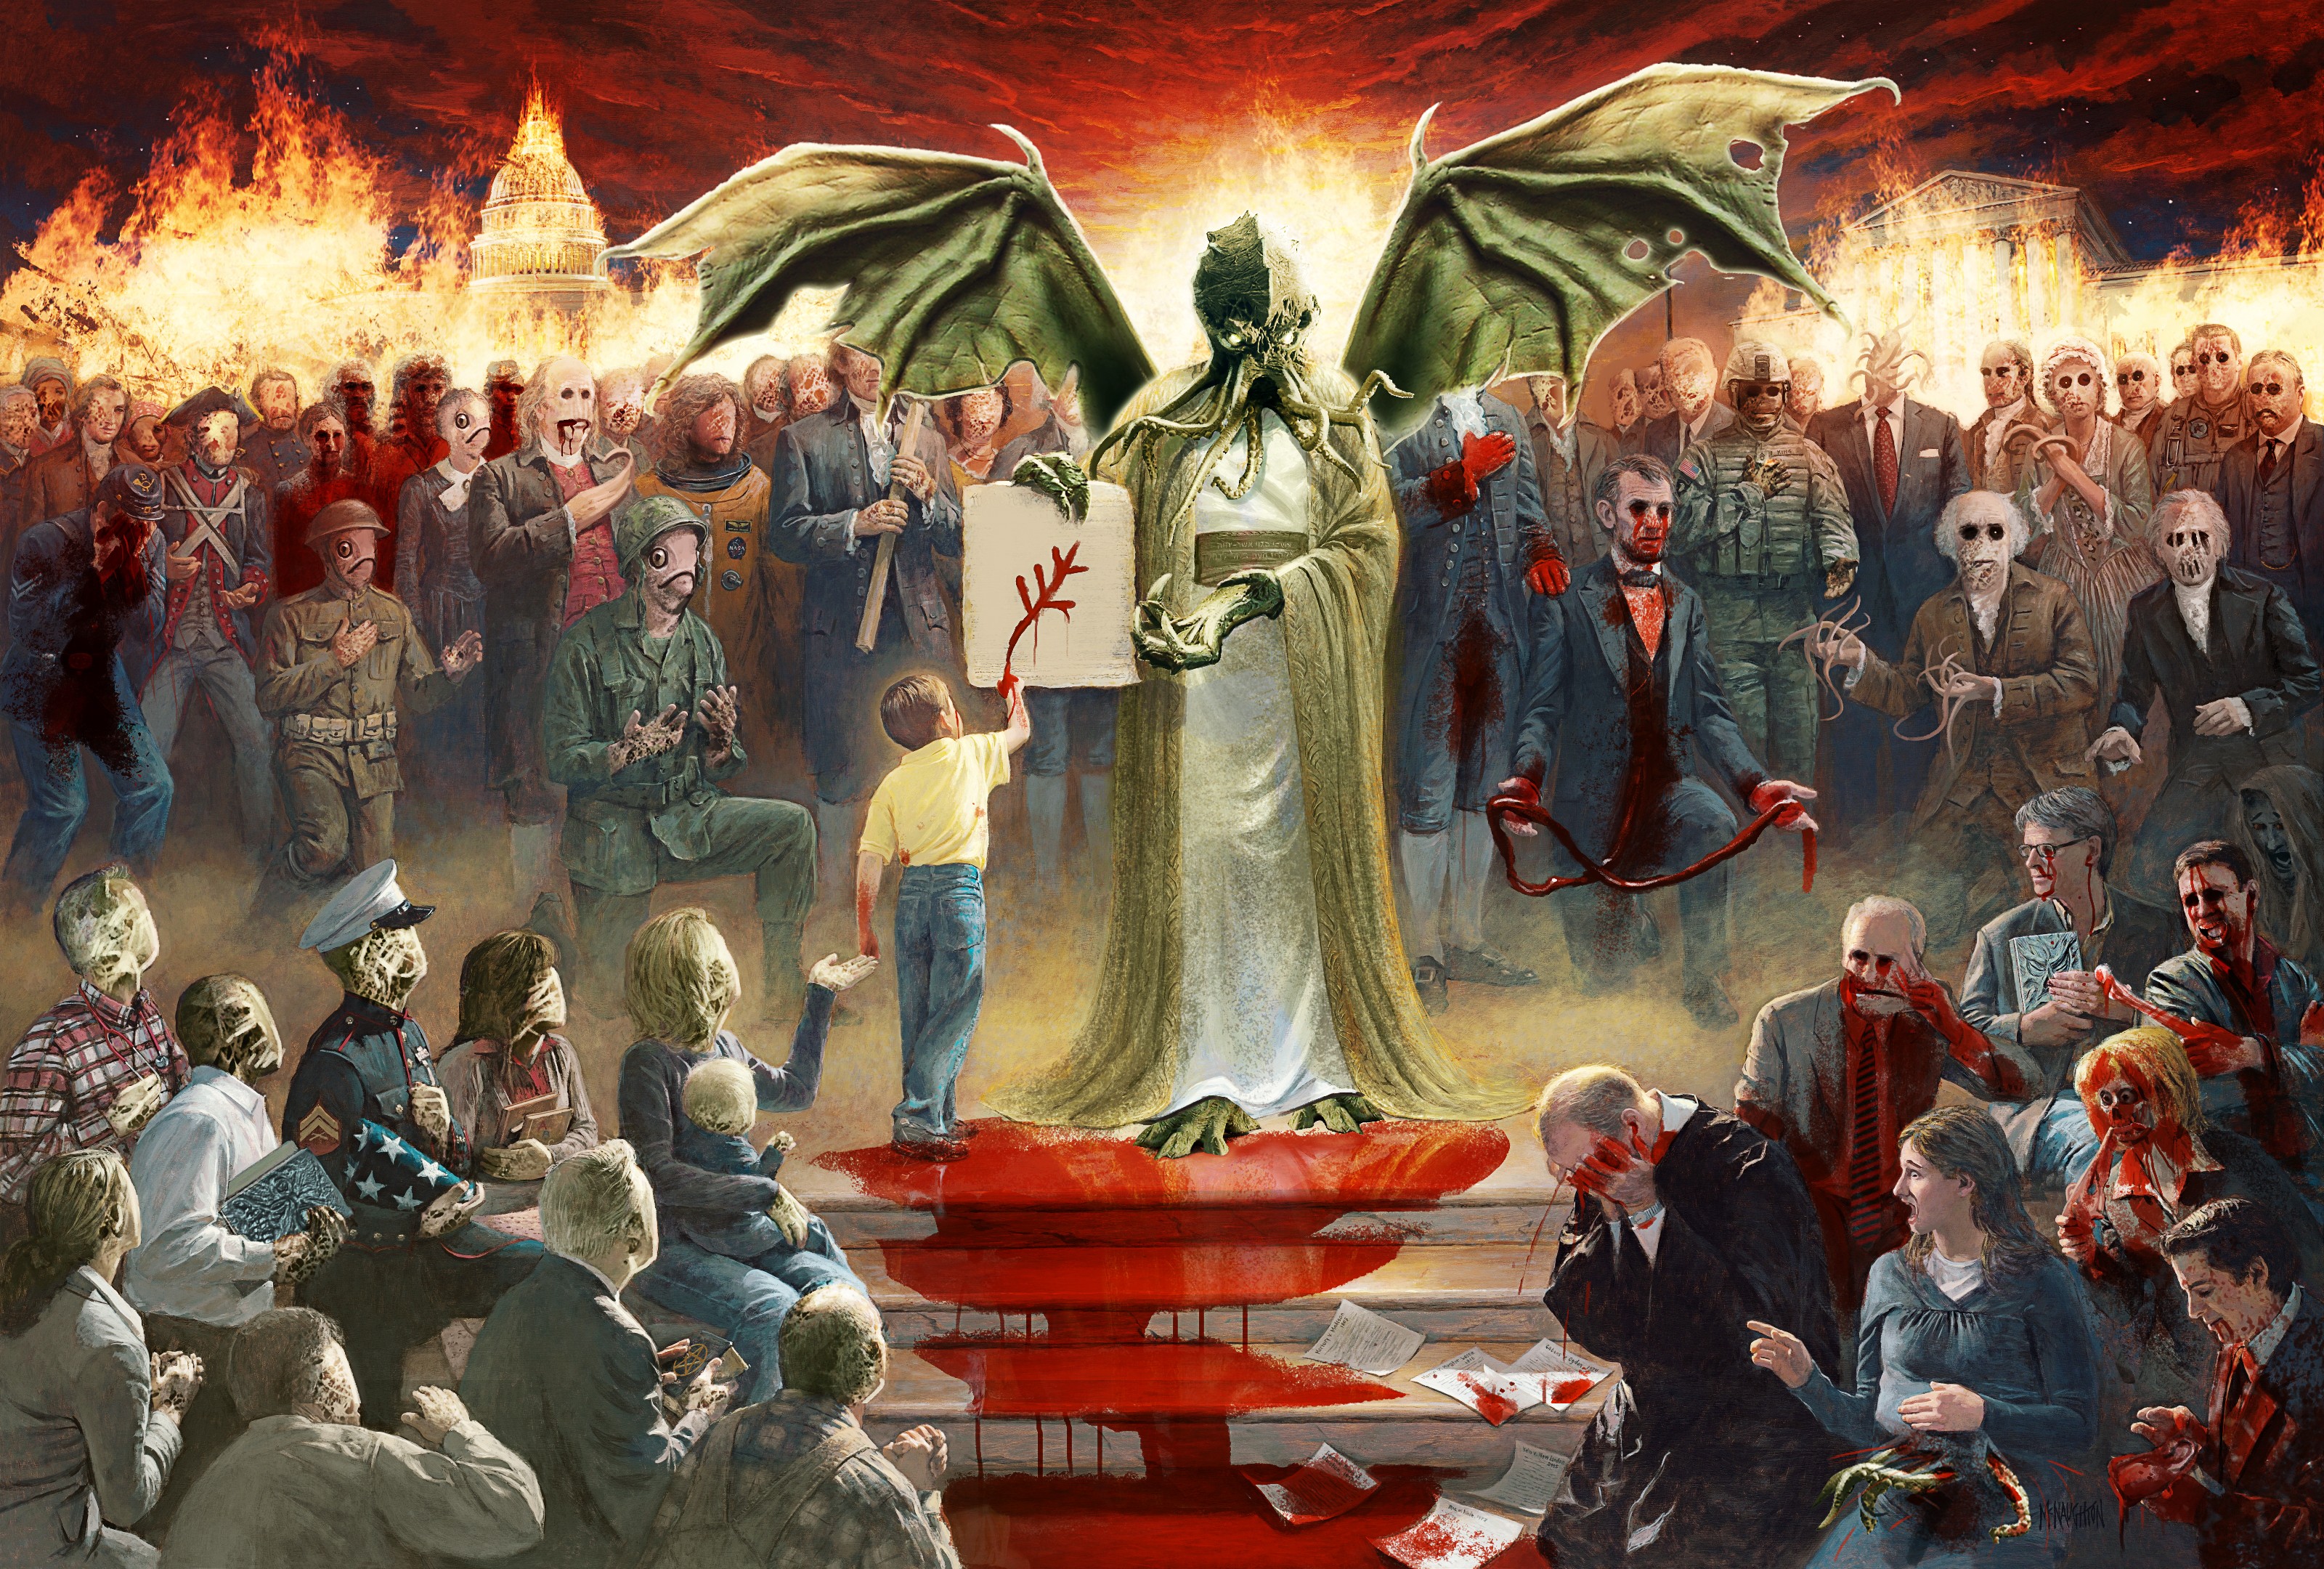 General 3200x2160 Cthulhu death H. P. Lovecraft horror artwork blood gore creature apocalyptic political figure identity politics